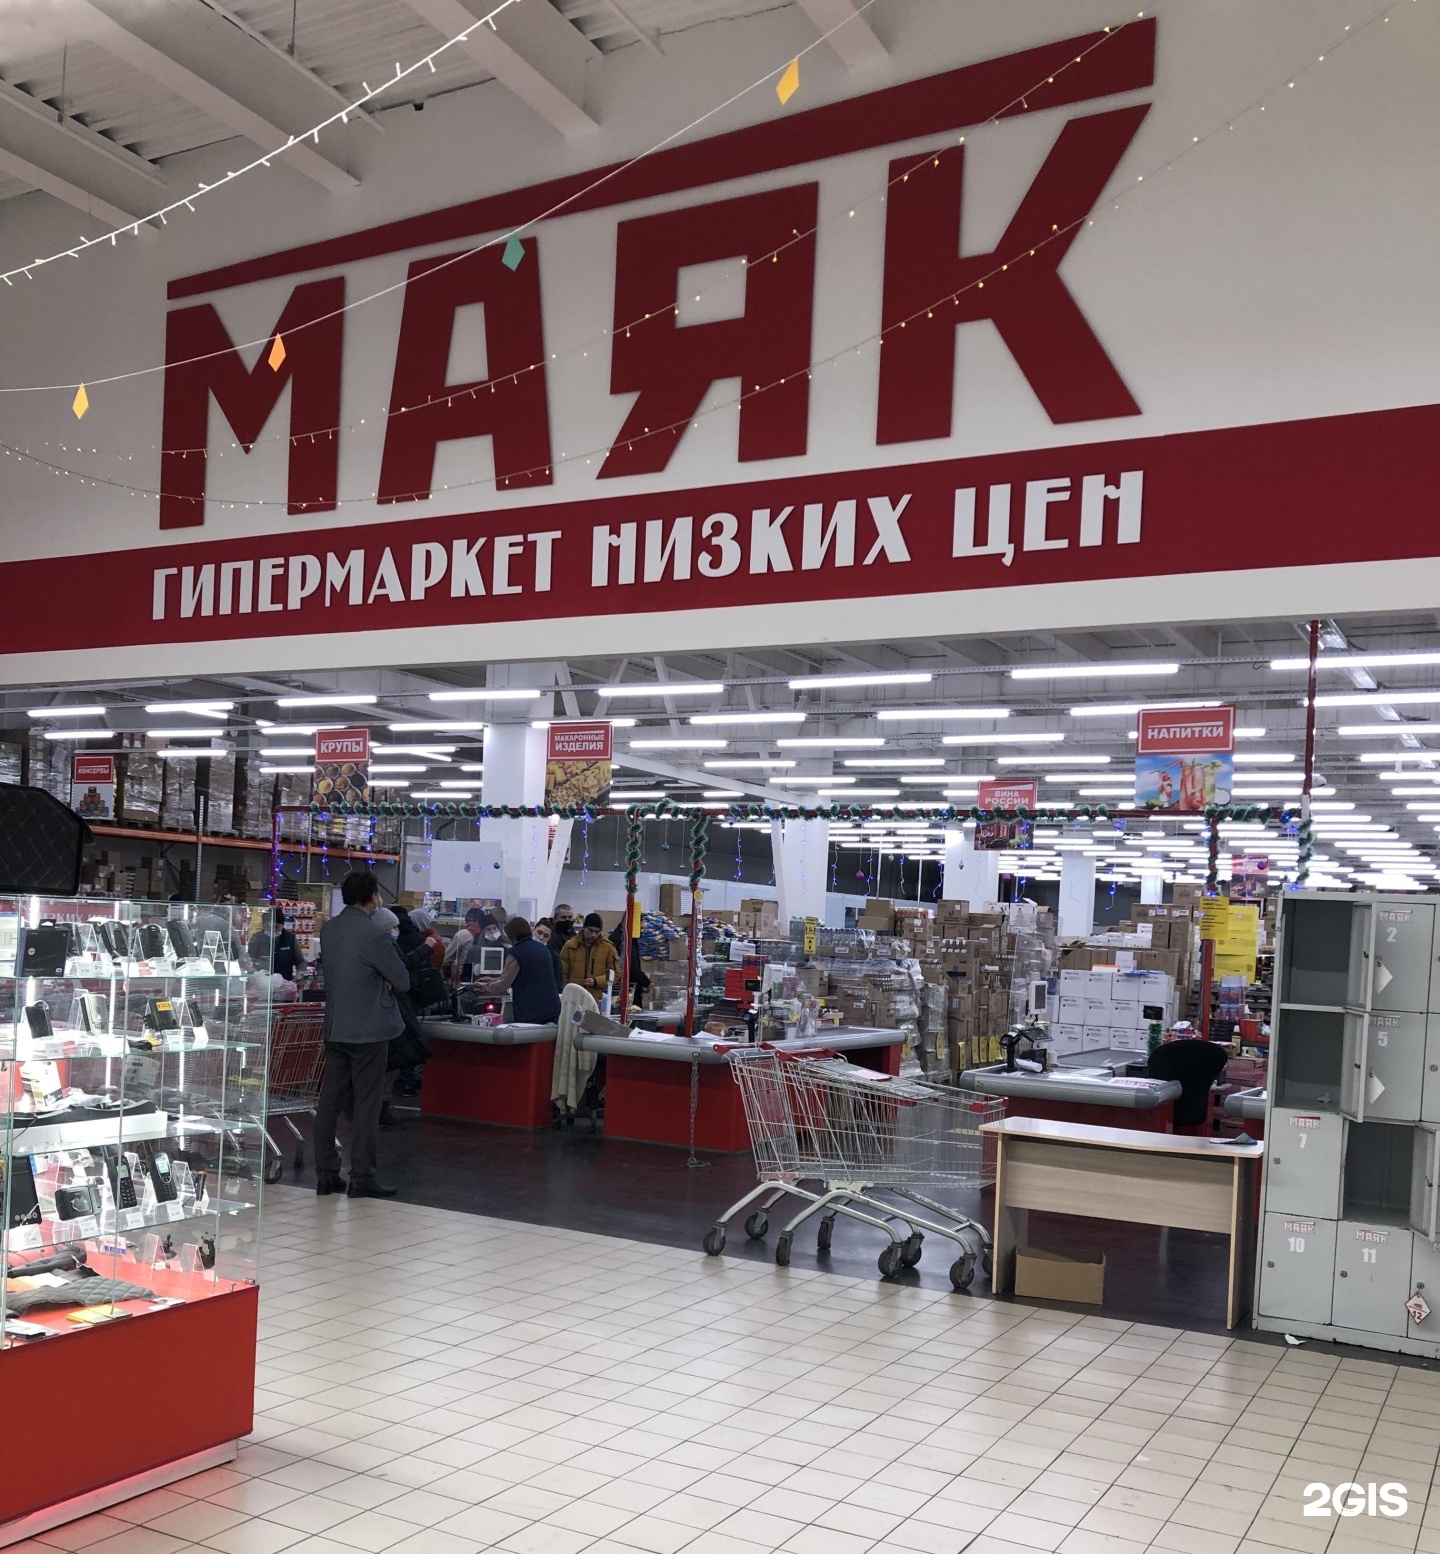 Магазин маяк в воронеже. Маяк гипермаркет Красноярск. Магазин Маяк Красноярск. Гипермаркет Маяк в Москве. Маяк логотип магазин.